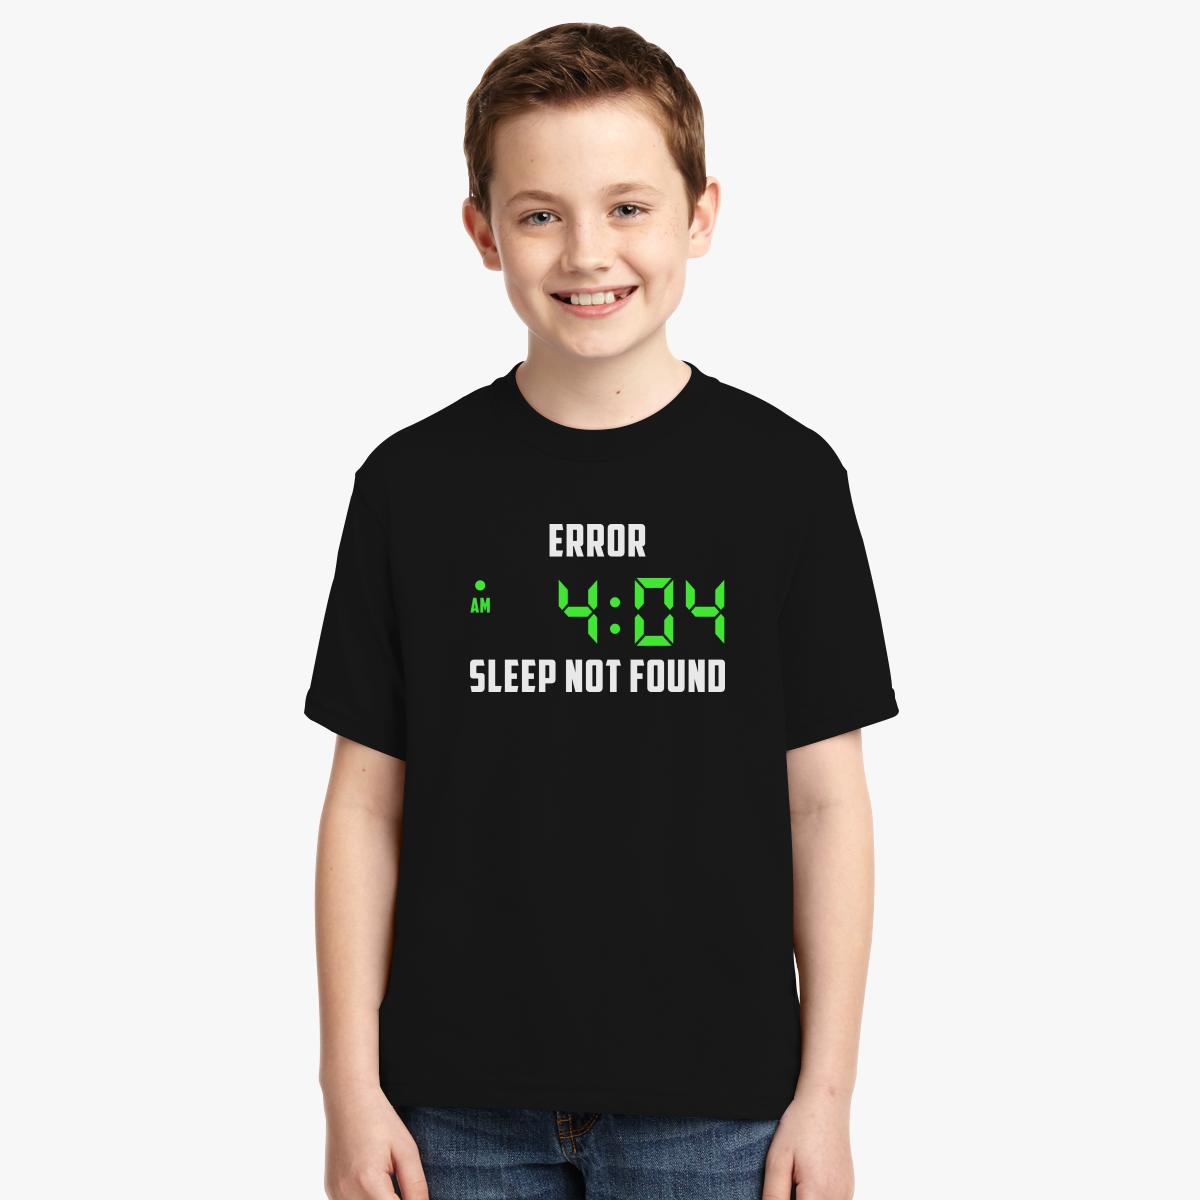 Boy Shirts Roblox Codes Rldm - 5 new pants codes roblox high school youtube